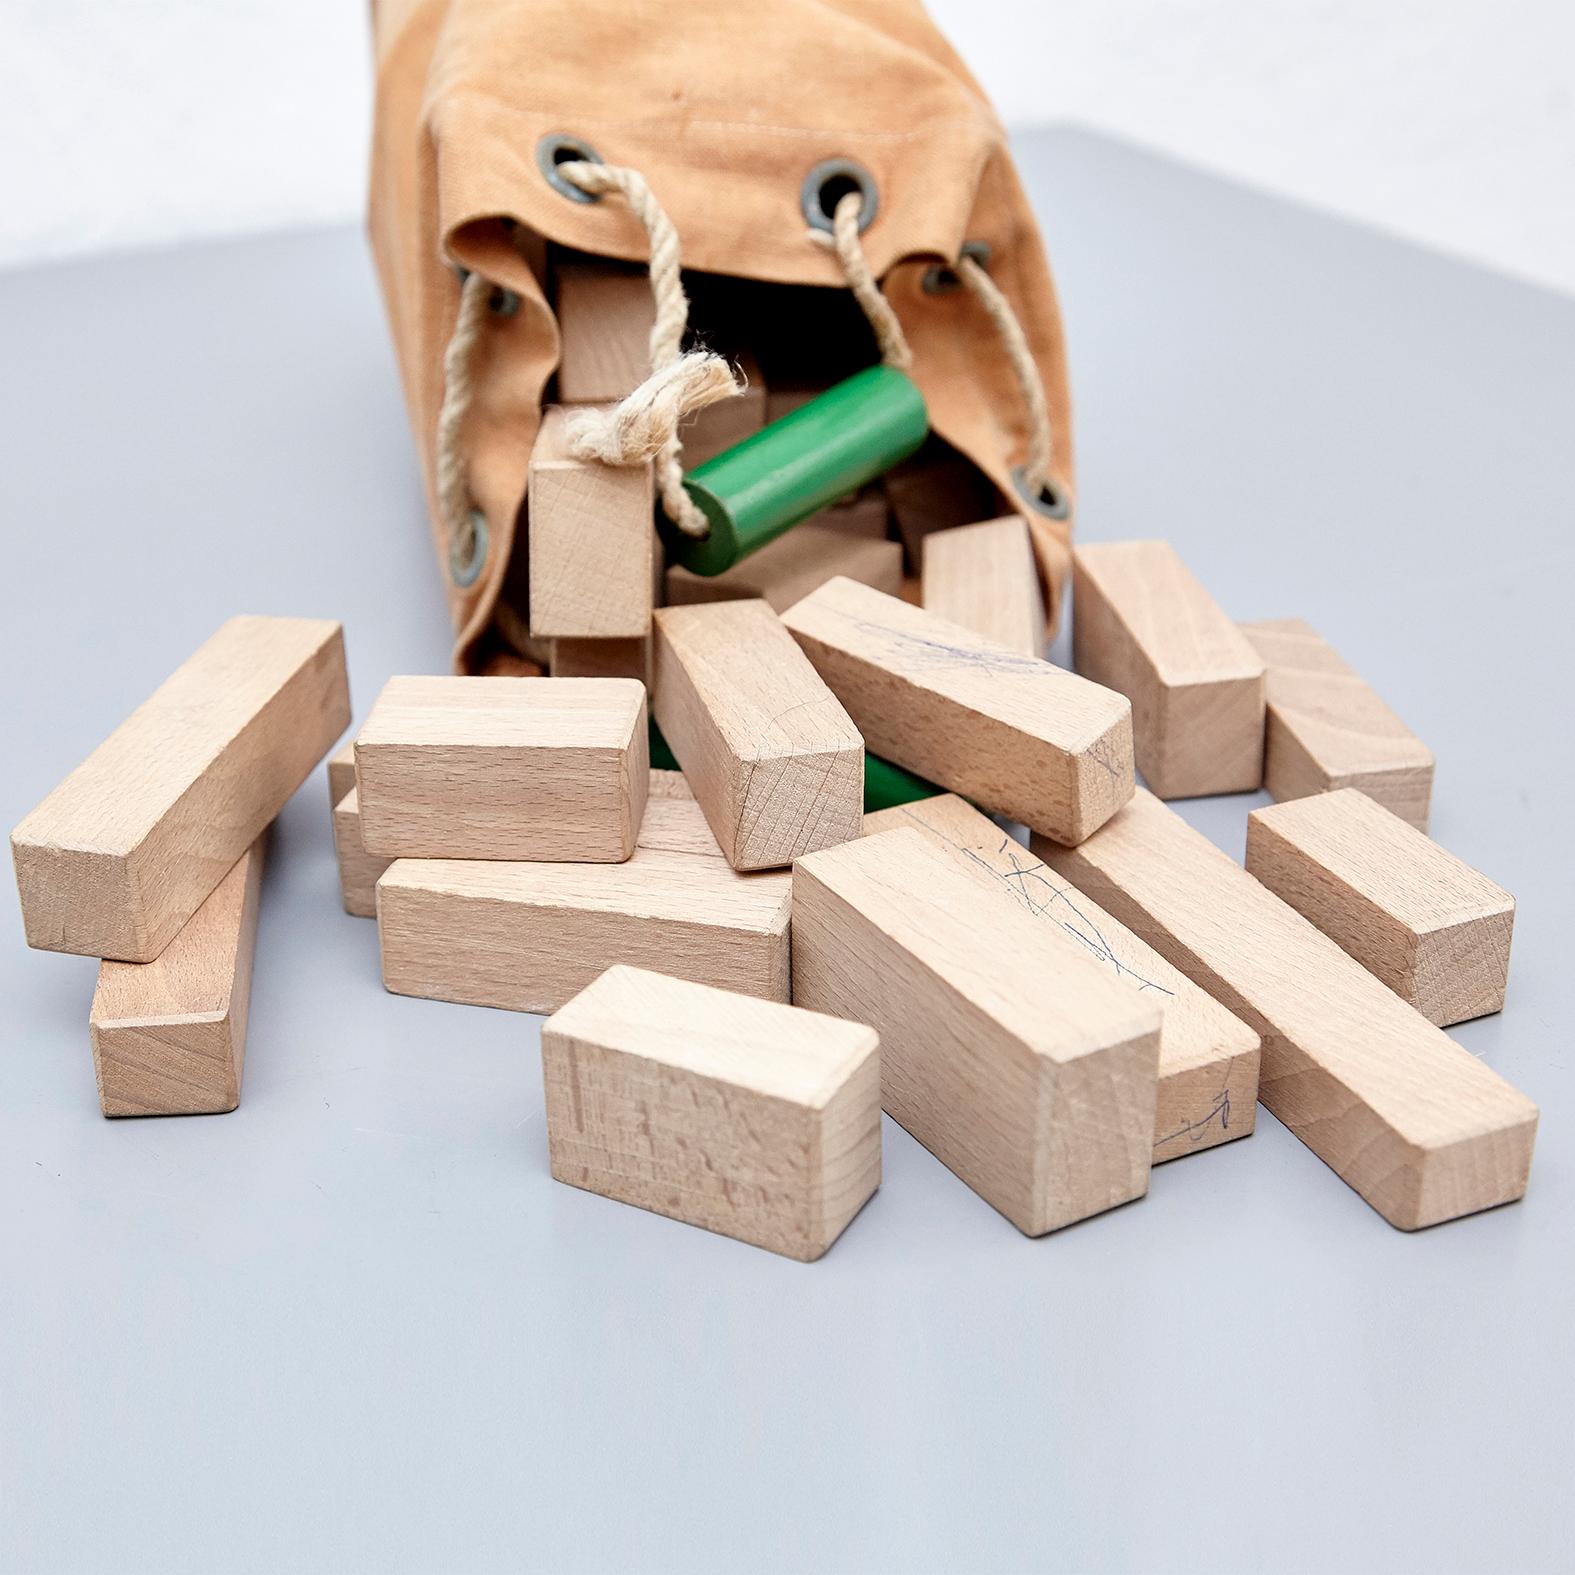 Ko Verzuu for Ado, Mid-Century Modern, Wood Blocks Construction Netherlands Toy 1